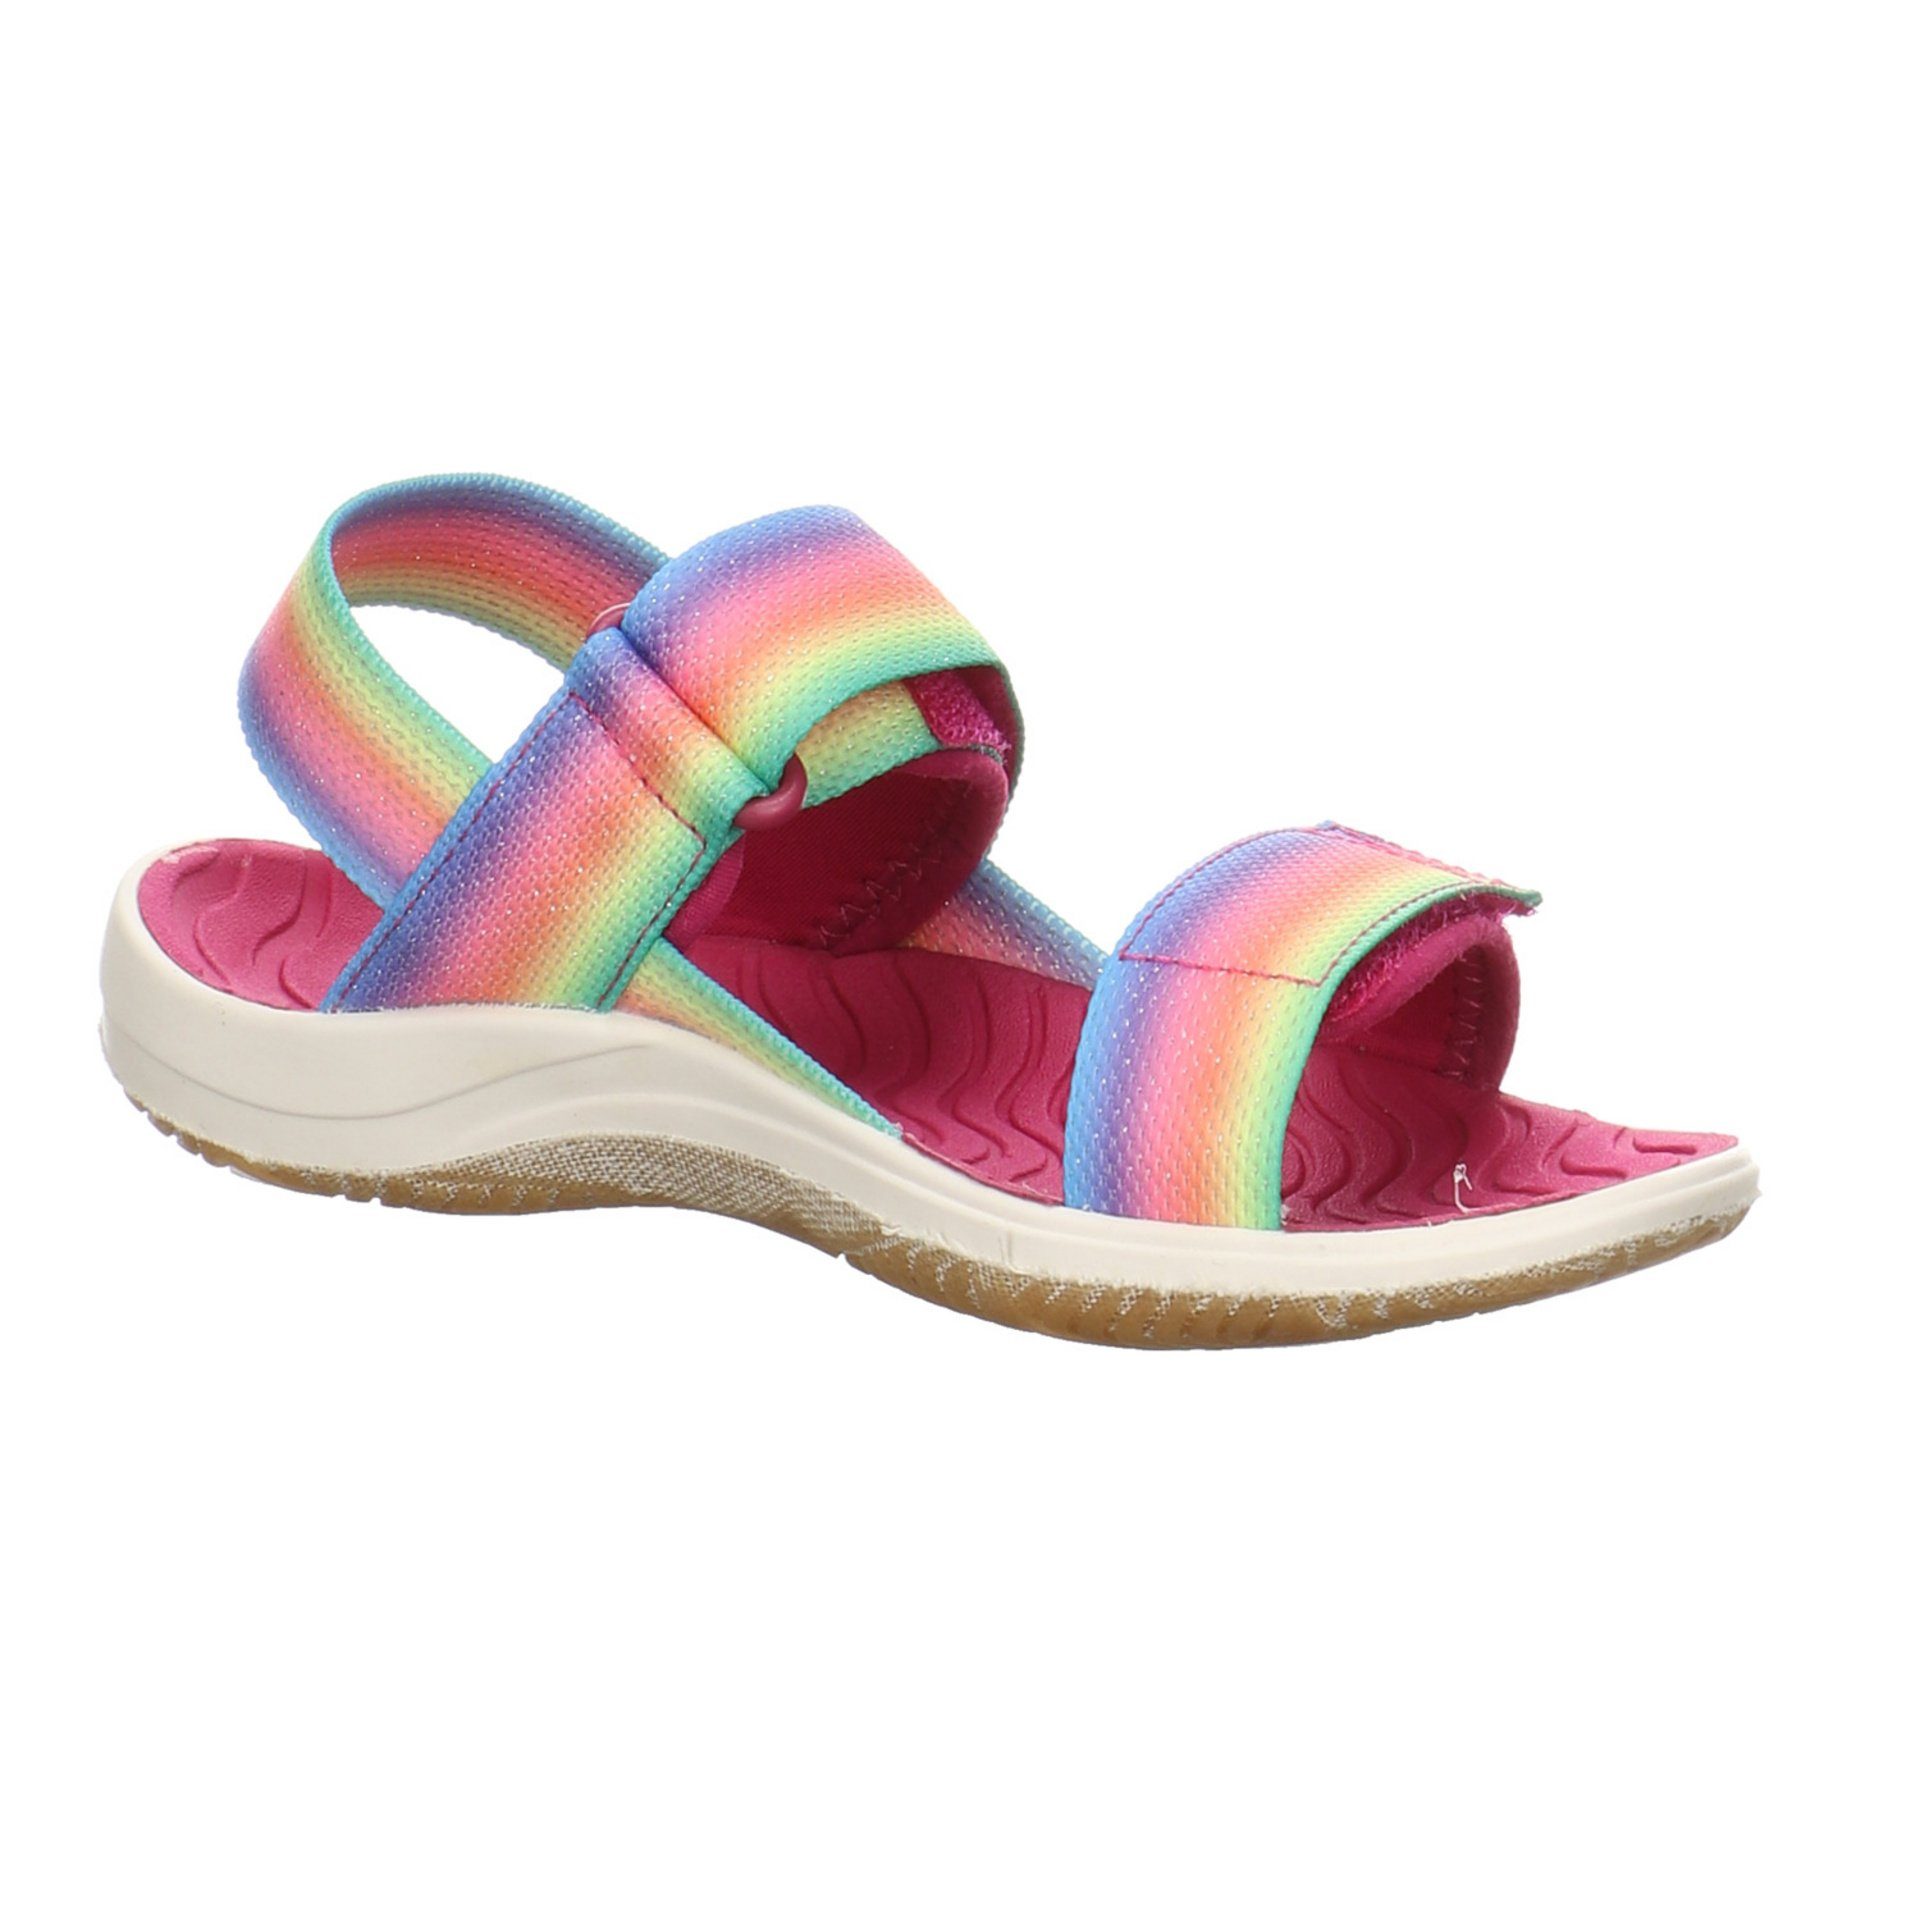 Sandalen Backstrap Elle Textil Mädchen rainbow/festival Sandale Keen Schuhe Sandale